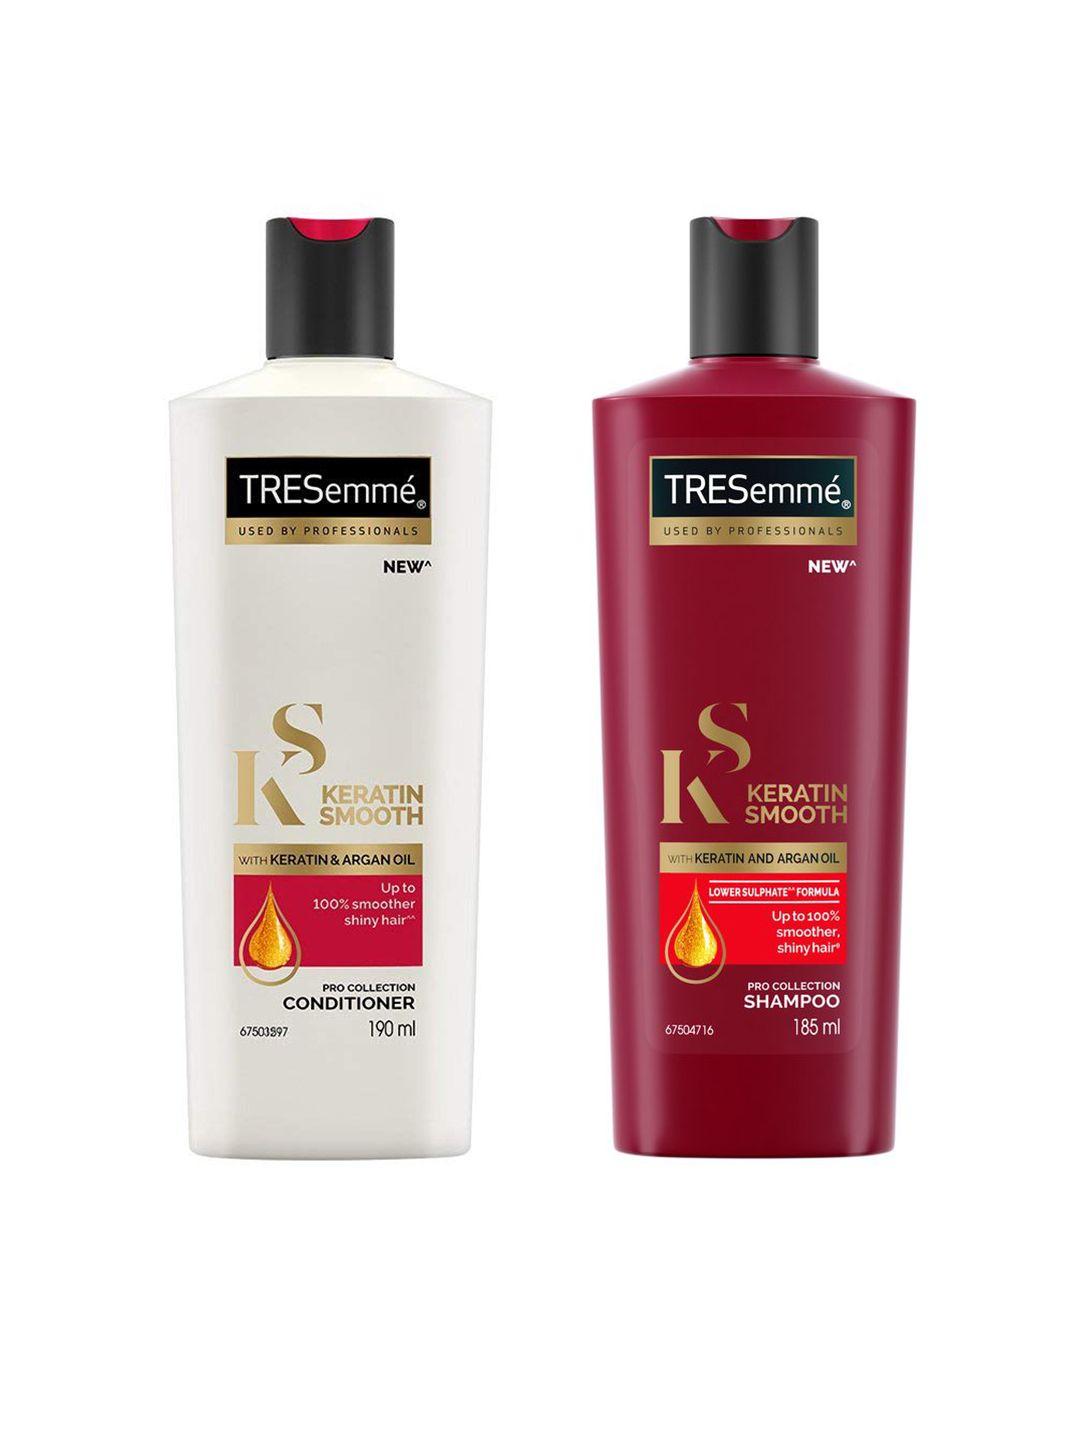 tresemme set of keratin smooth shampoo & conditioner